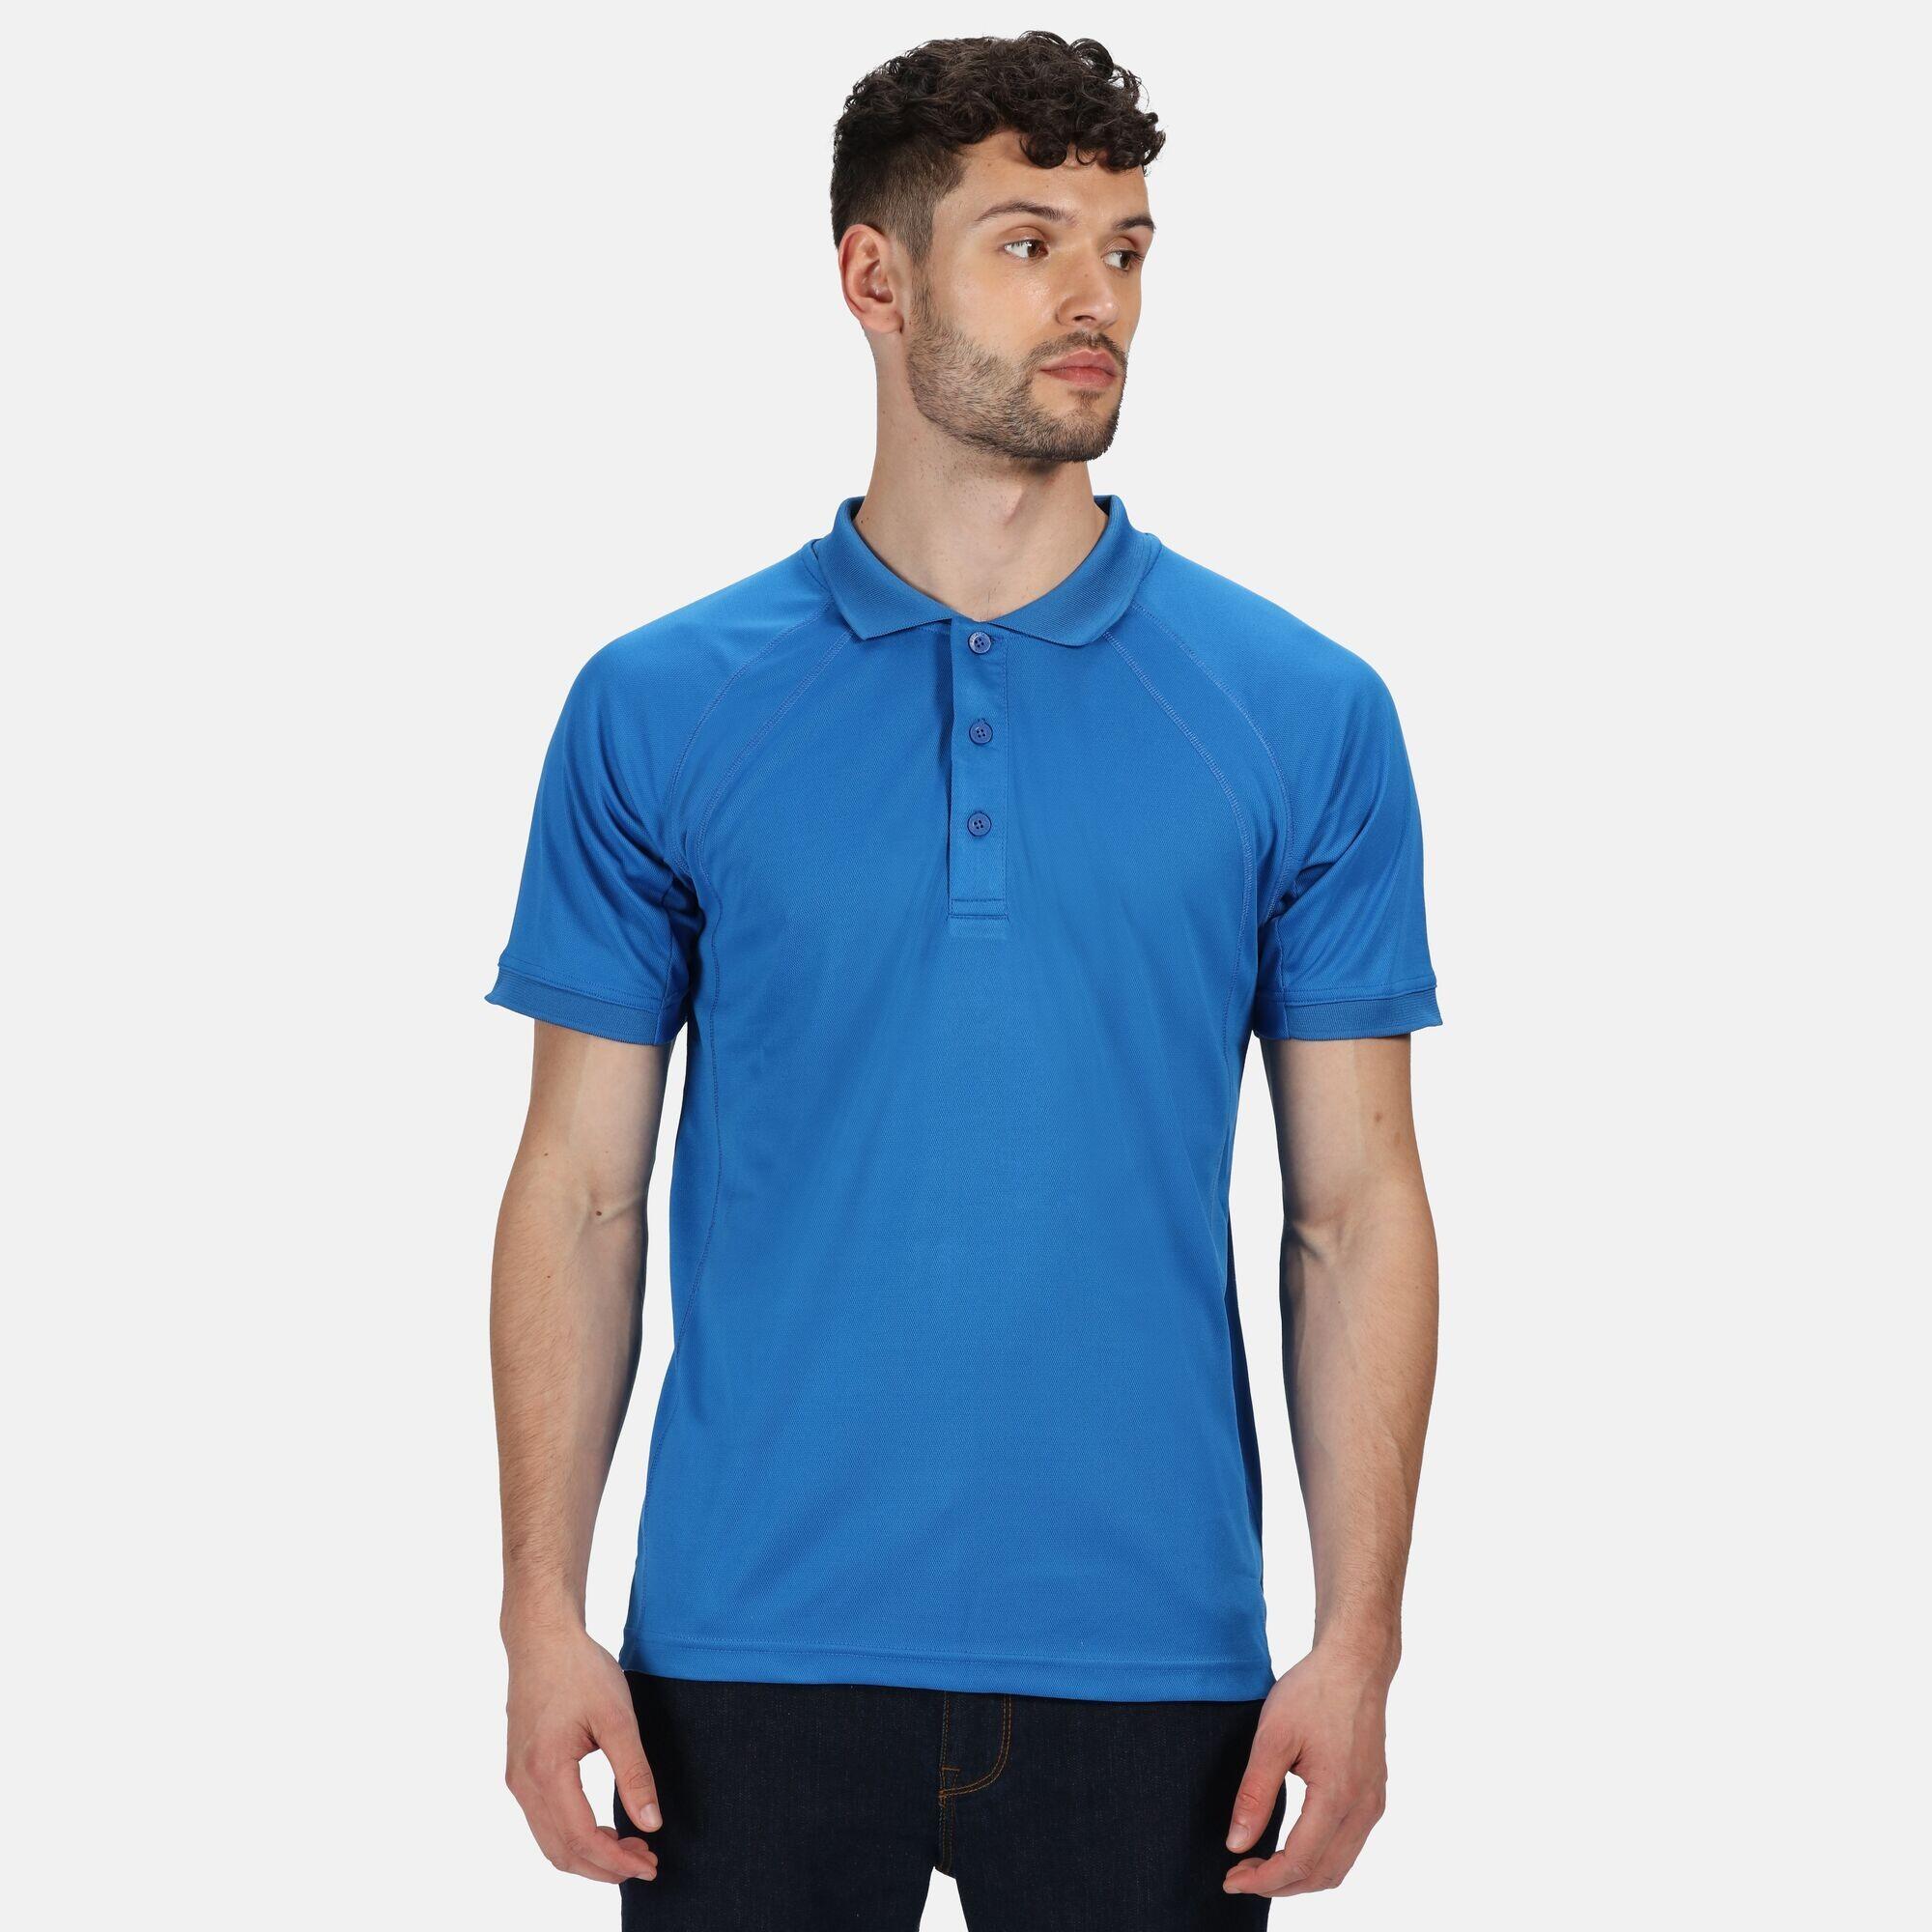 Hardwear Mens Coolweave Short Sleeve Polo Shirt (Oxford Blue) 2/5